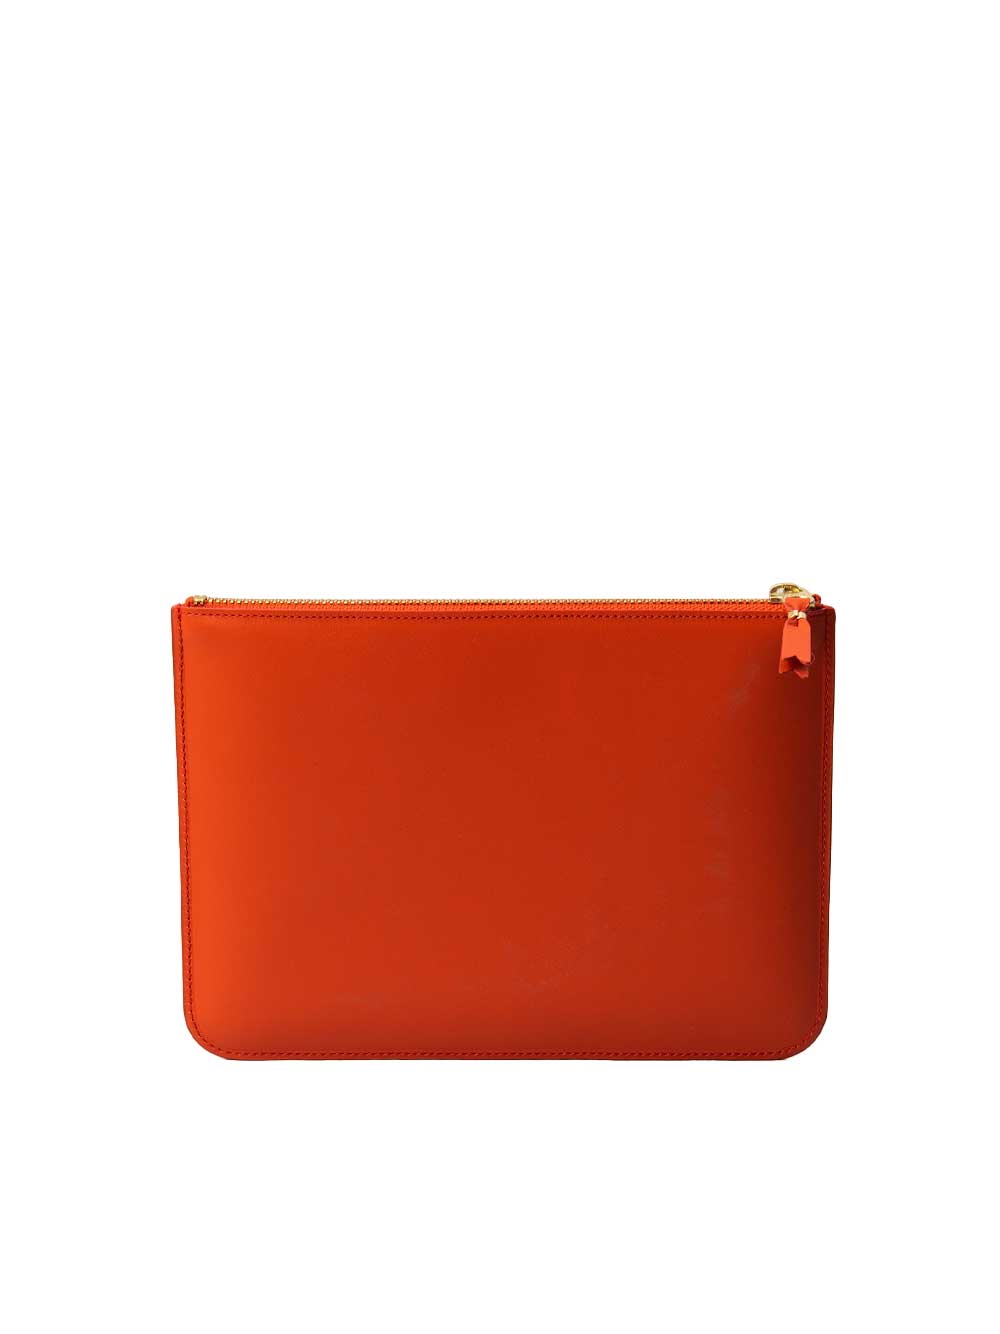 Clutch Bag In Orange Special Edition